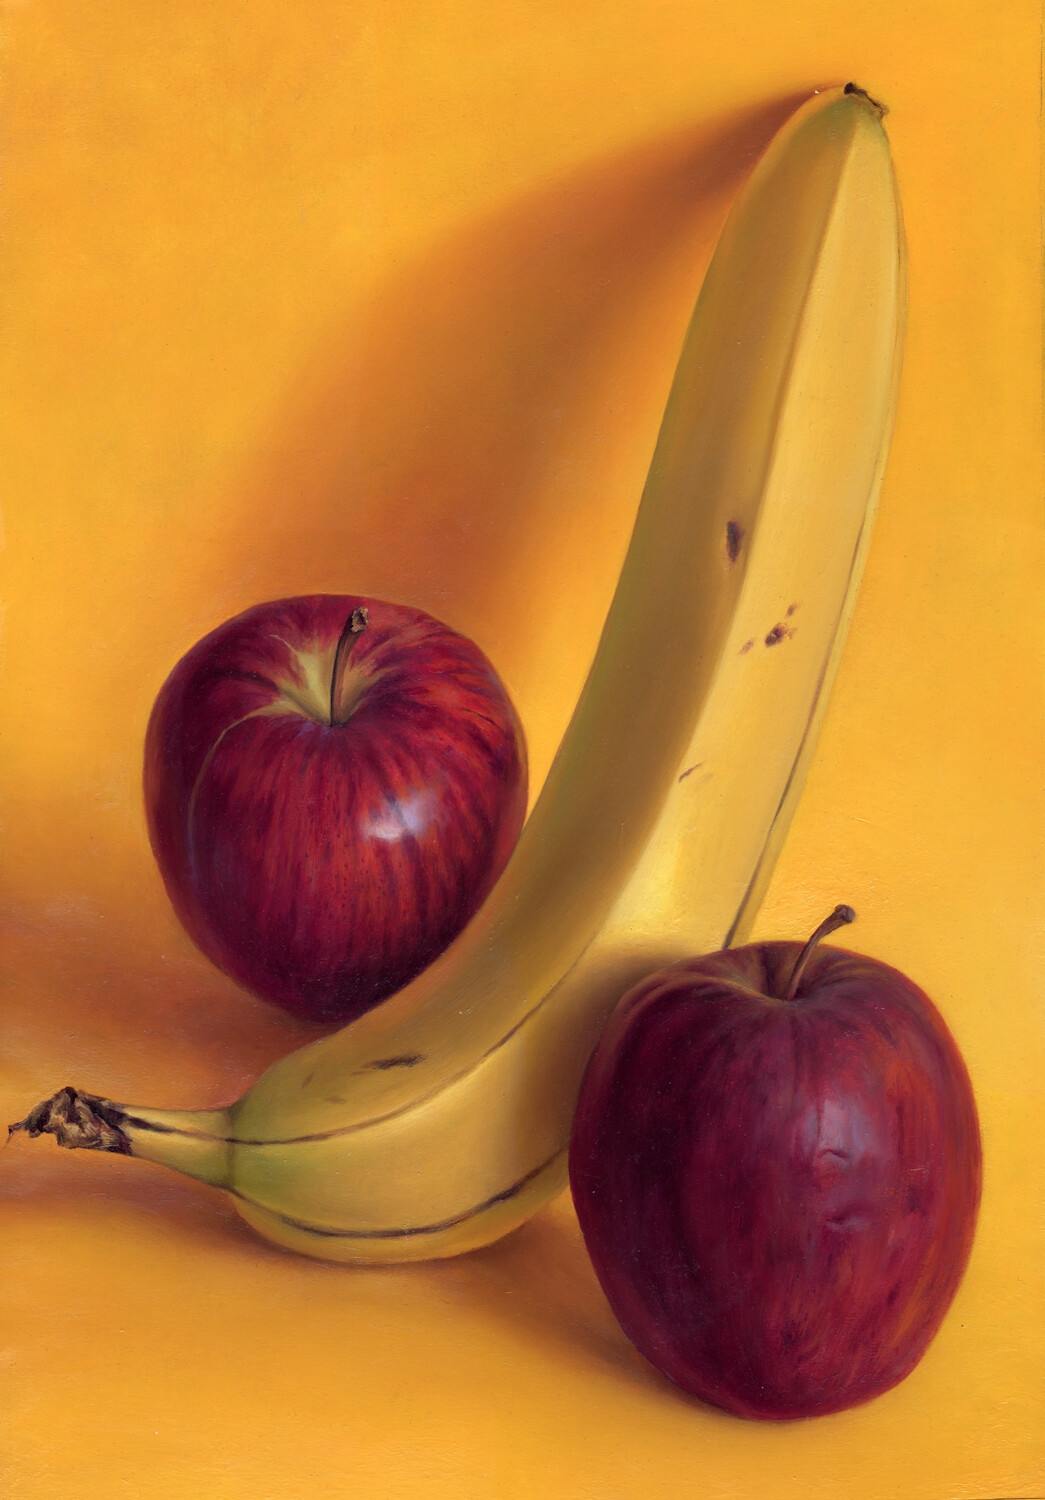 Банан и 2 яблока